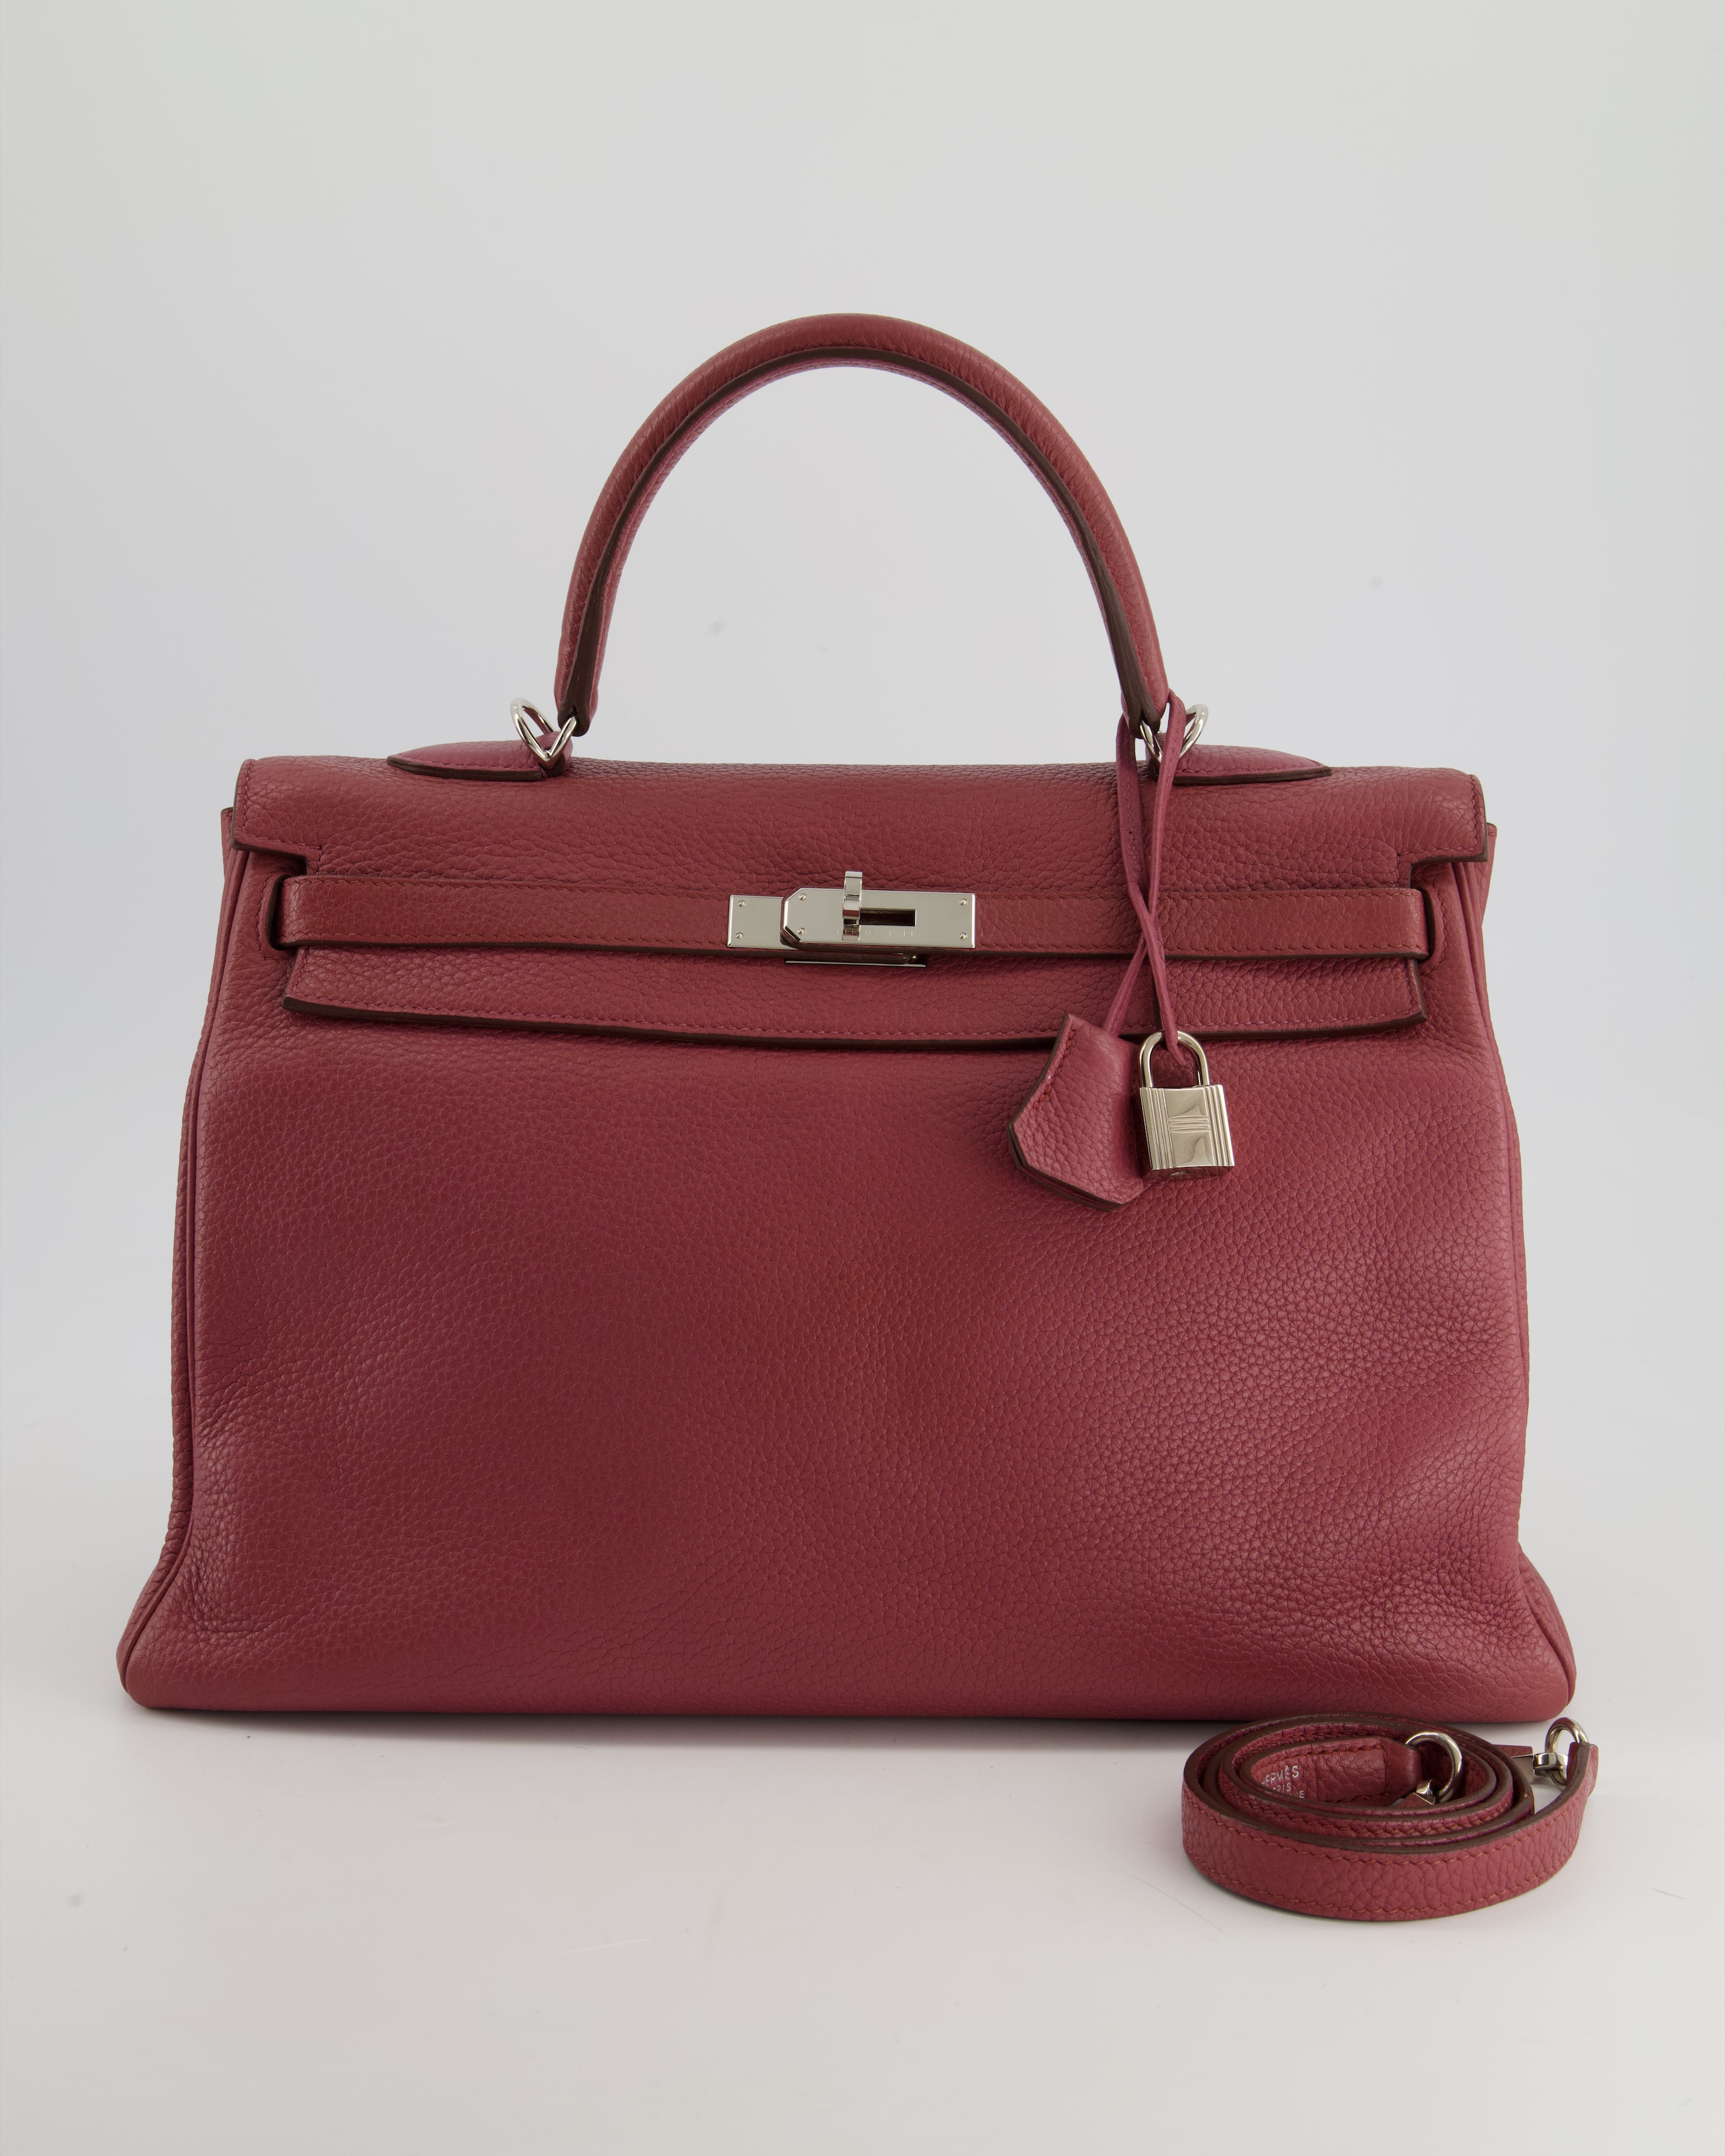 Hermes Kelly Bag 35cm in Bois De Rose Togo Leather With Palladium